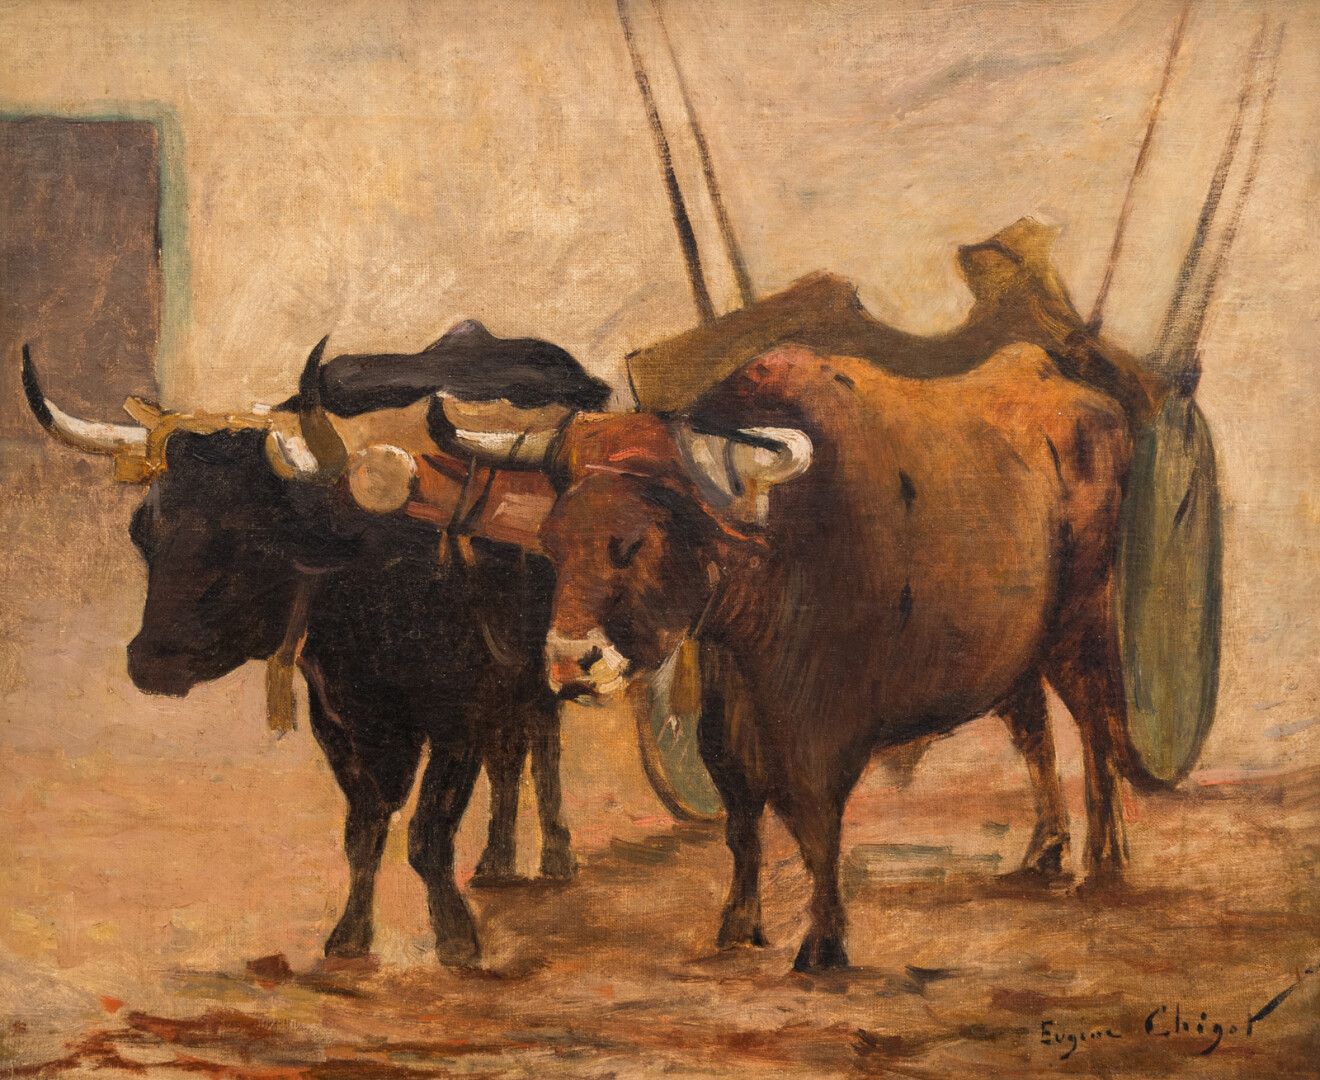 Null 欧仁-希高 (1860-1923)

马车

布面油画，右下角有签名

38,5 x 46,5 cm (修复后)